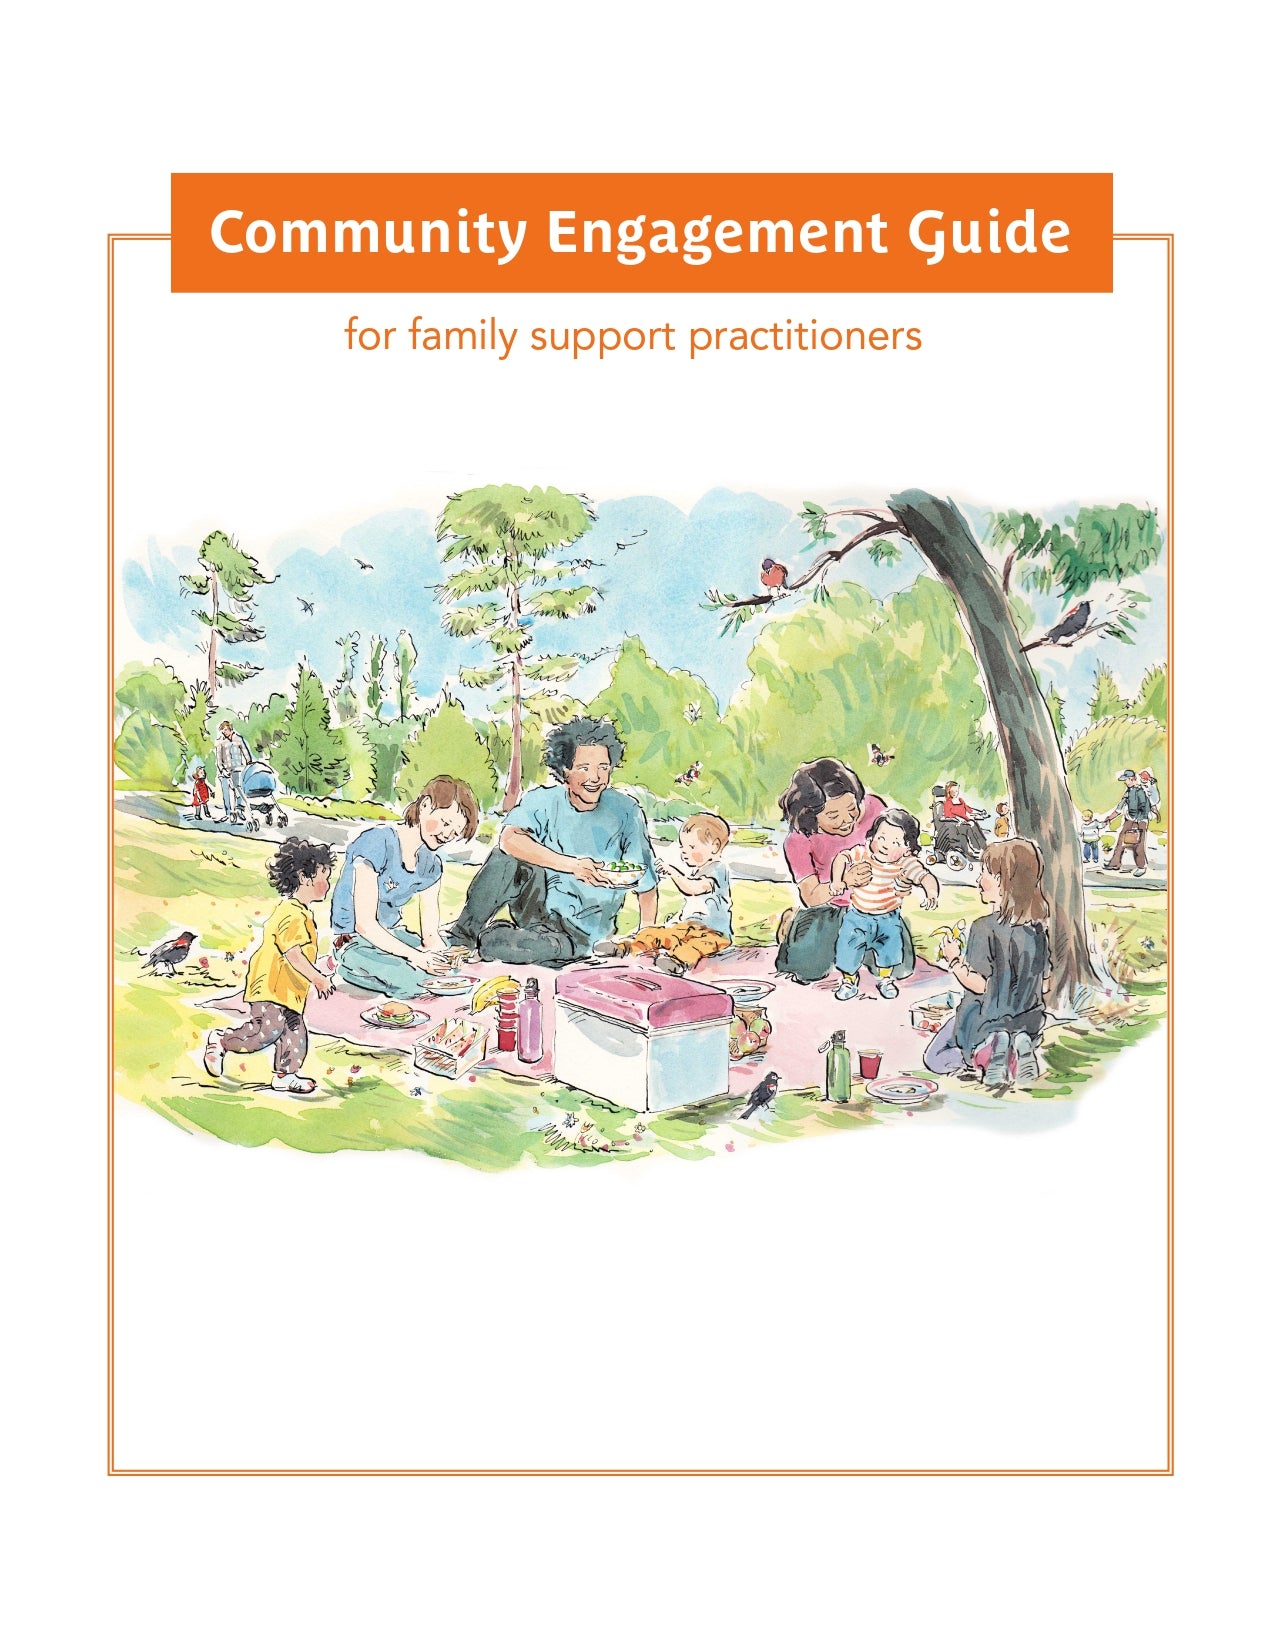 Community Engagement Guide PDF.